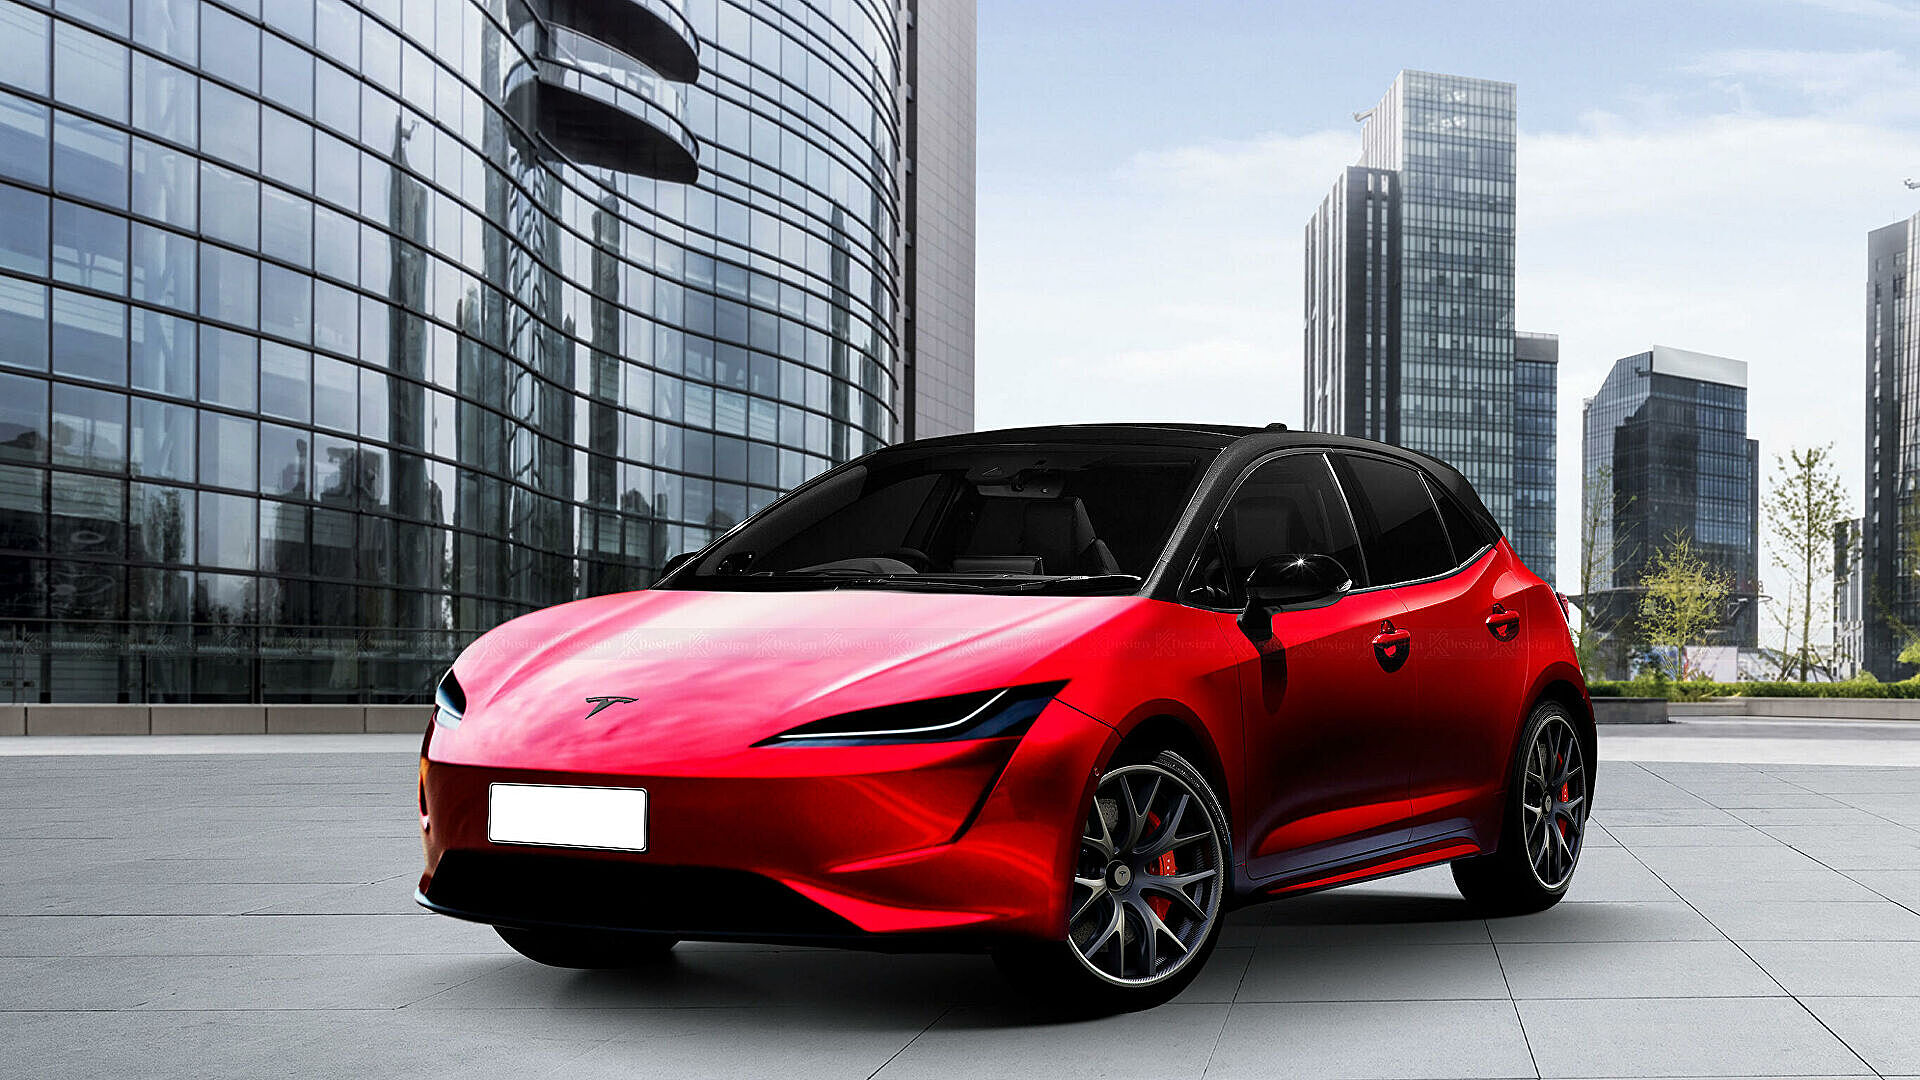 Tesla установила рекорд по поставкам электромобилей